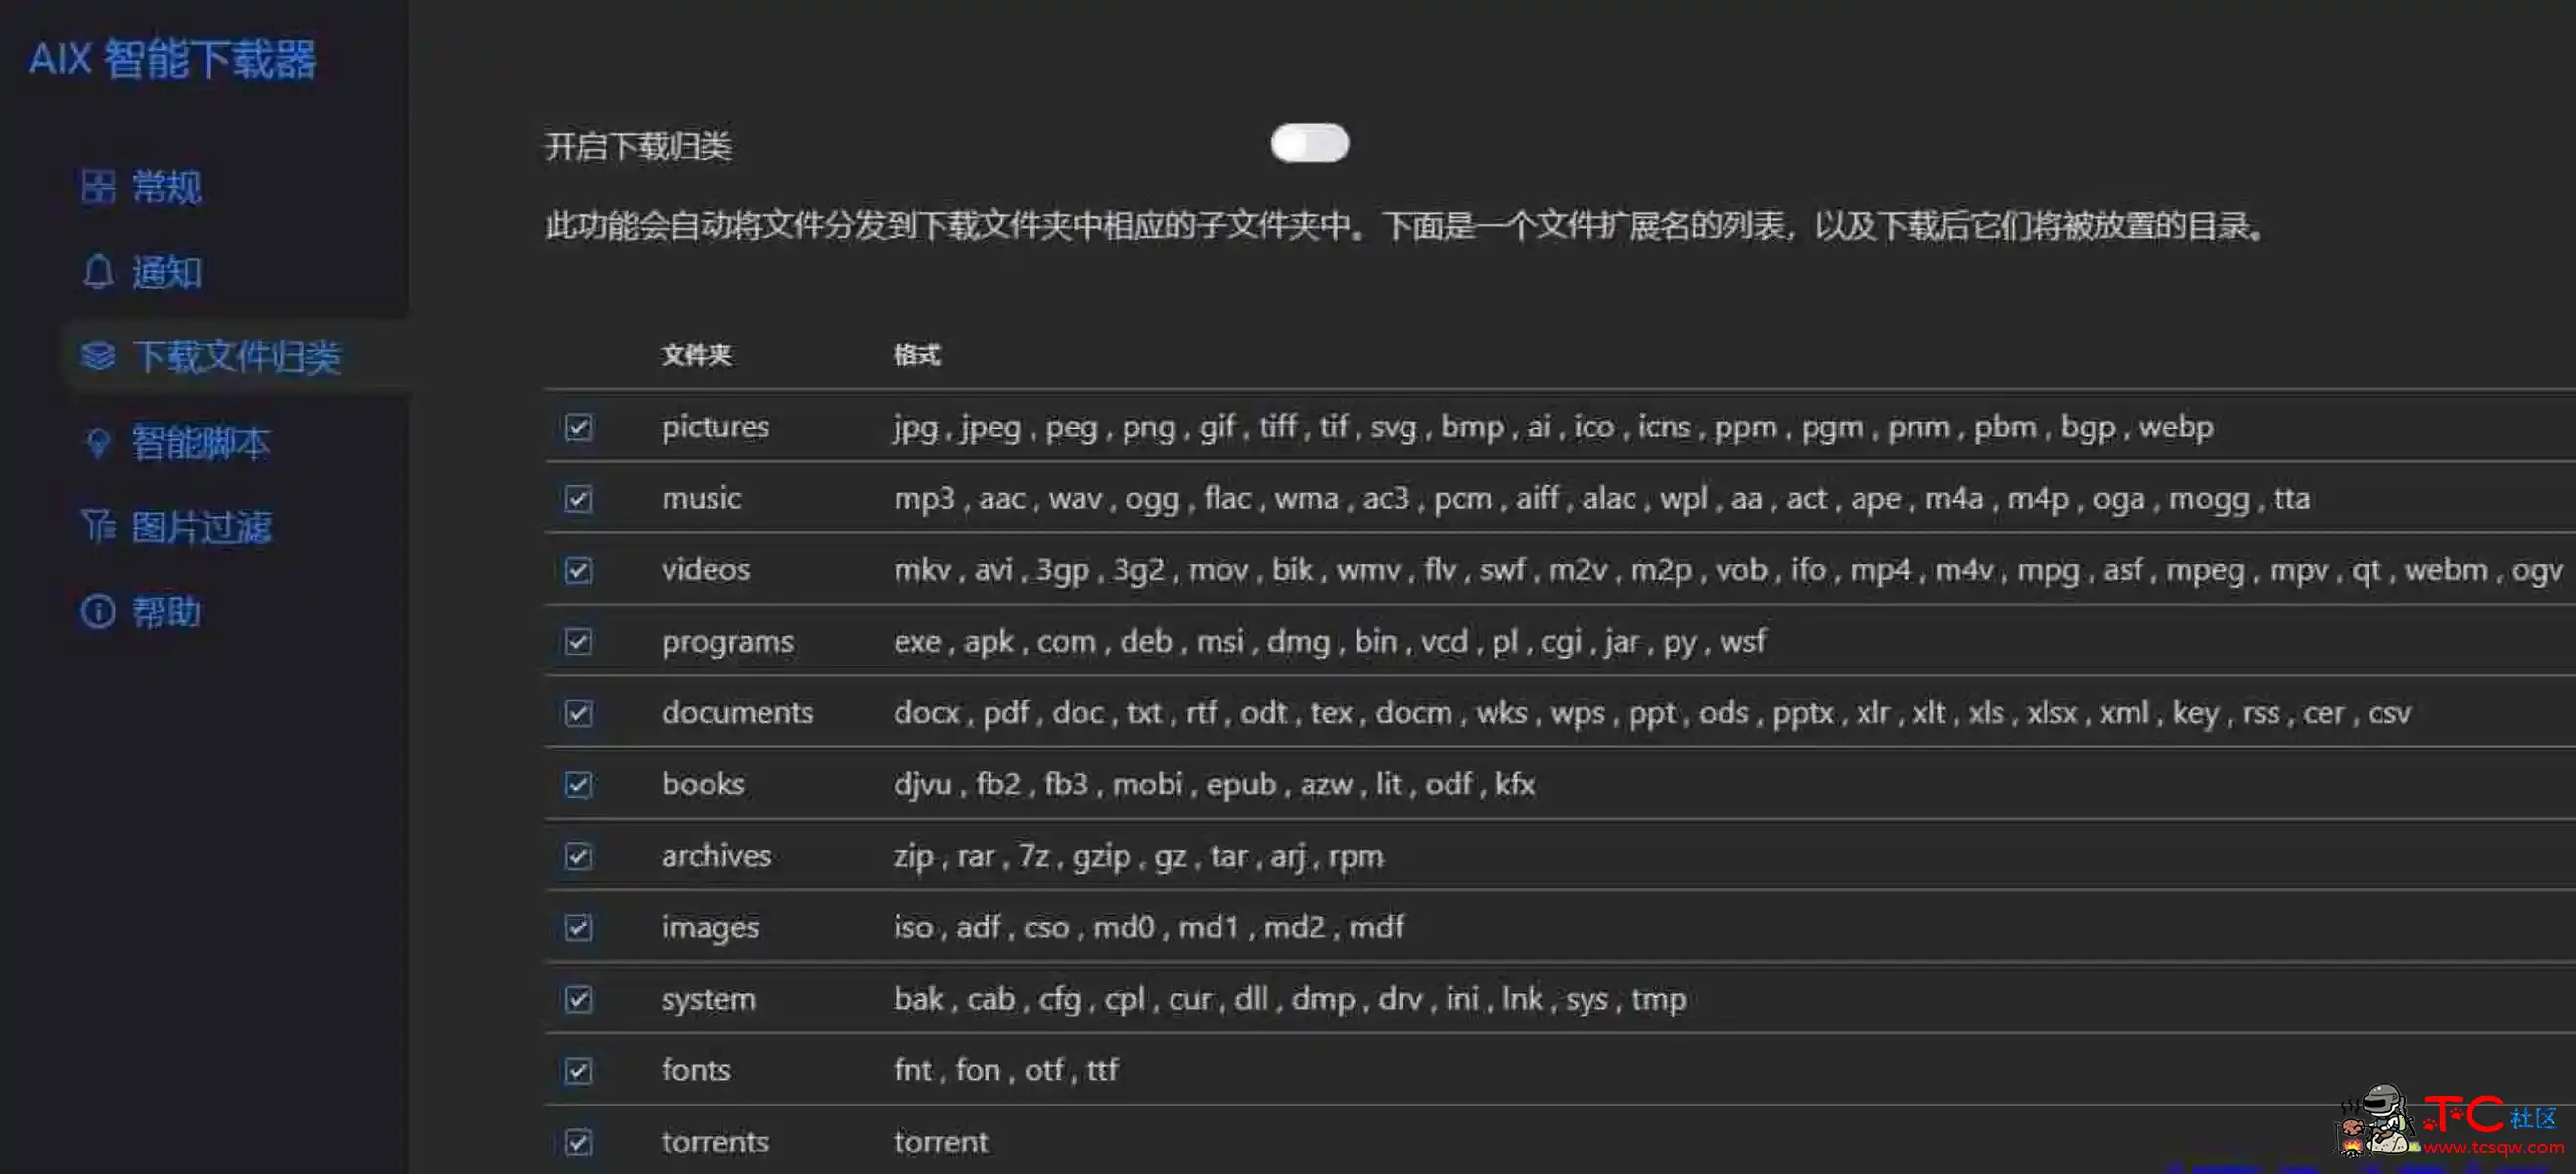 AIX网页嗅探插件可批量下载图片视频音频文档 屠城辅助网www.tcfz1.com2144